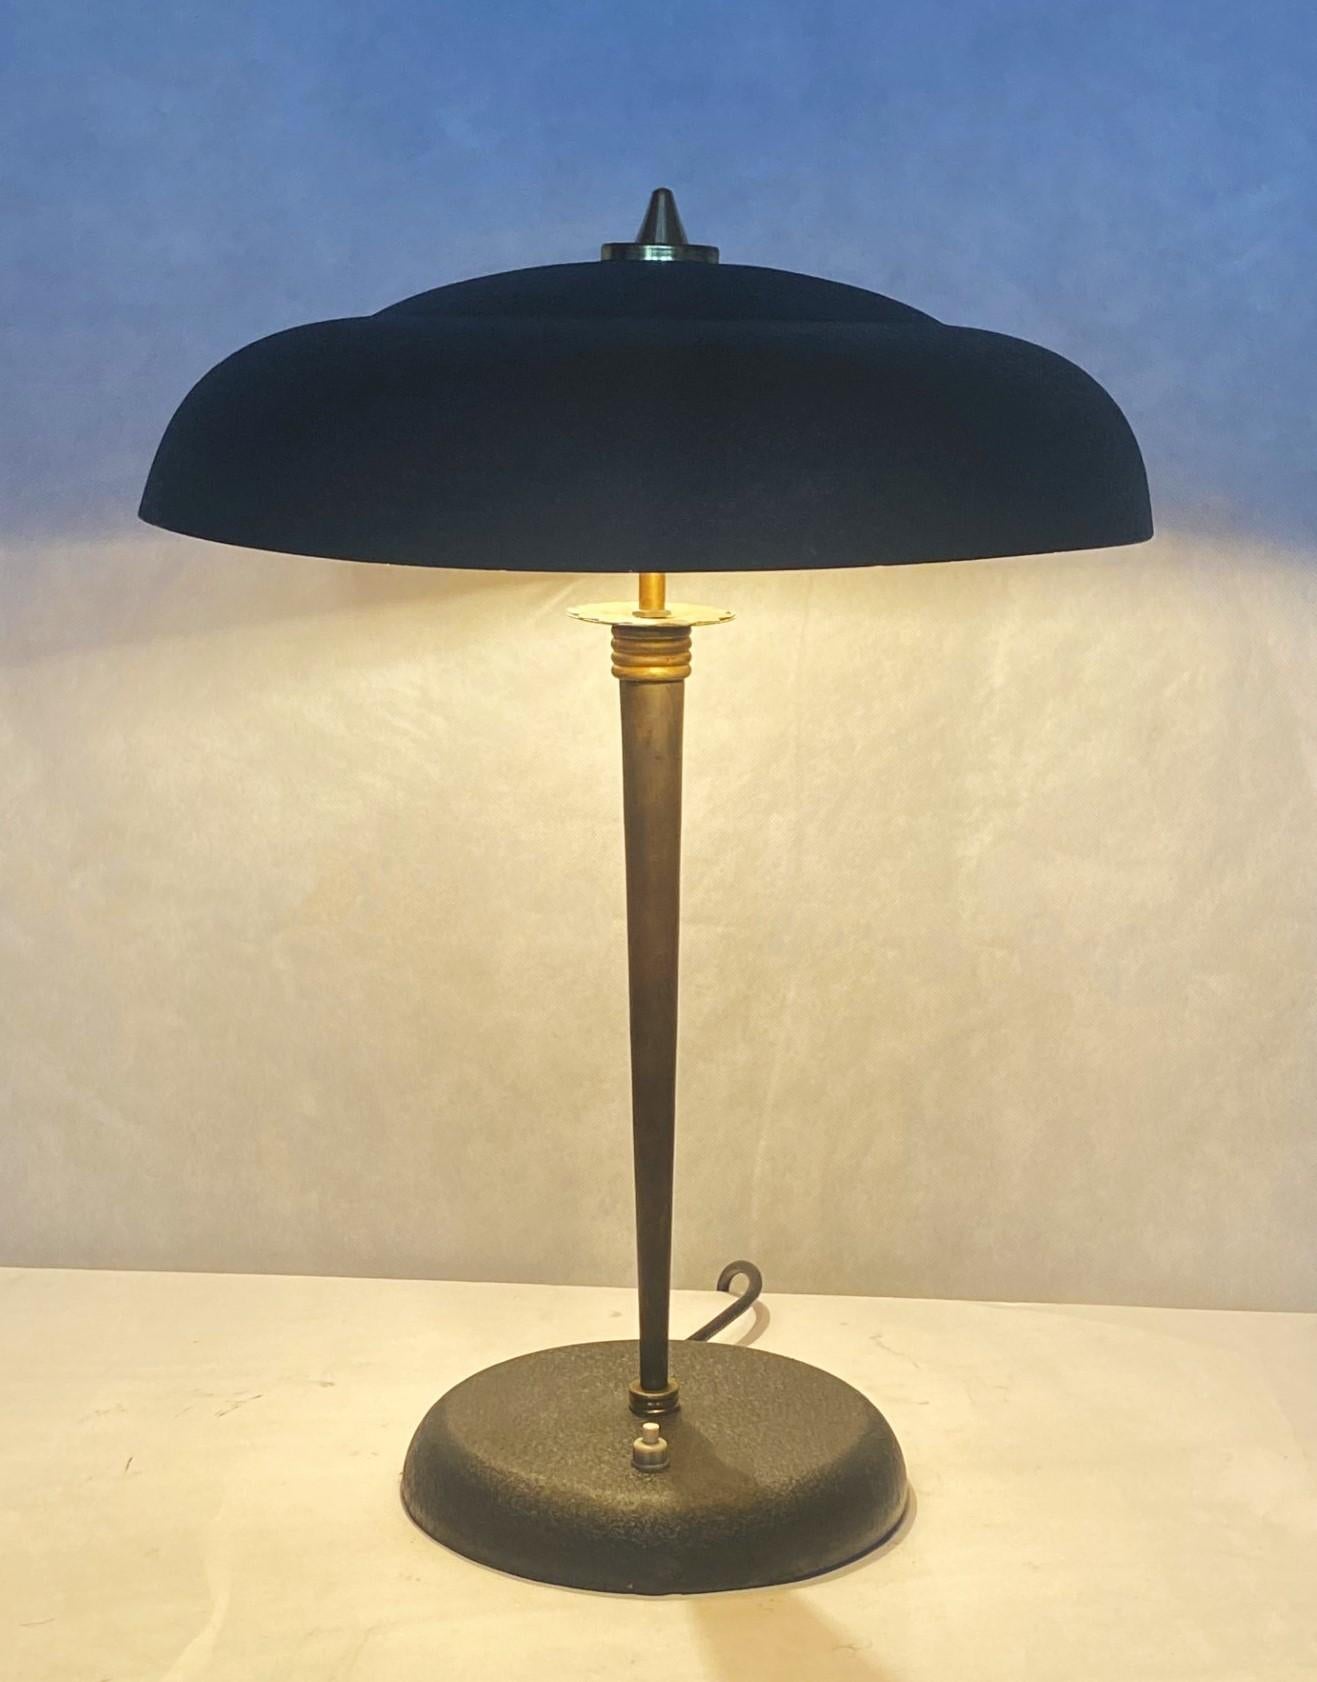 German Midcentury Stilnovo Desk or Table Lamp Brass Black Enameled Metal, Iataly, 1950s For Sale